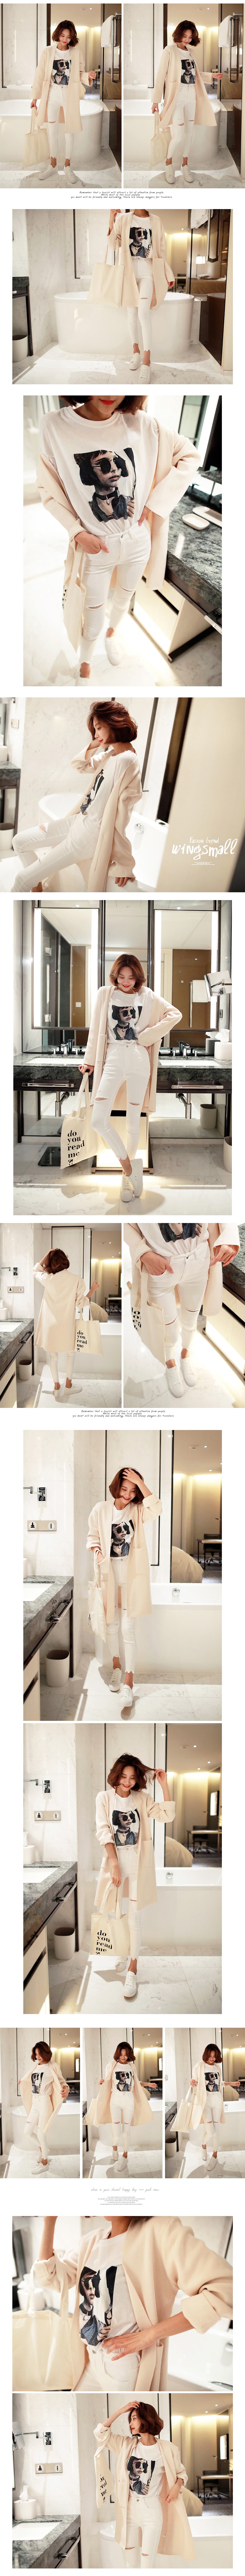 KOREA Frayed-Hem Destroyed Ankle Skinny Jeans #White S(25-26) [Free Shipping]